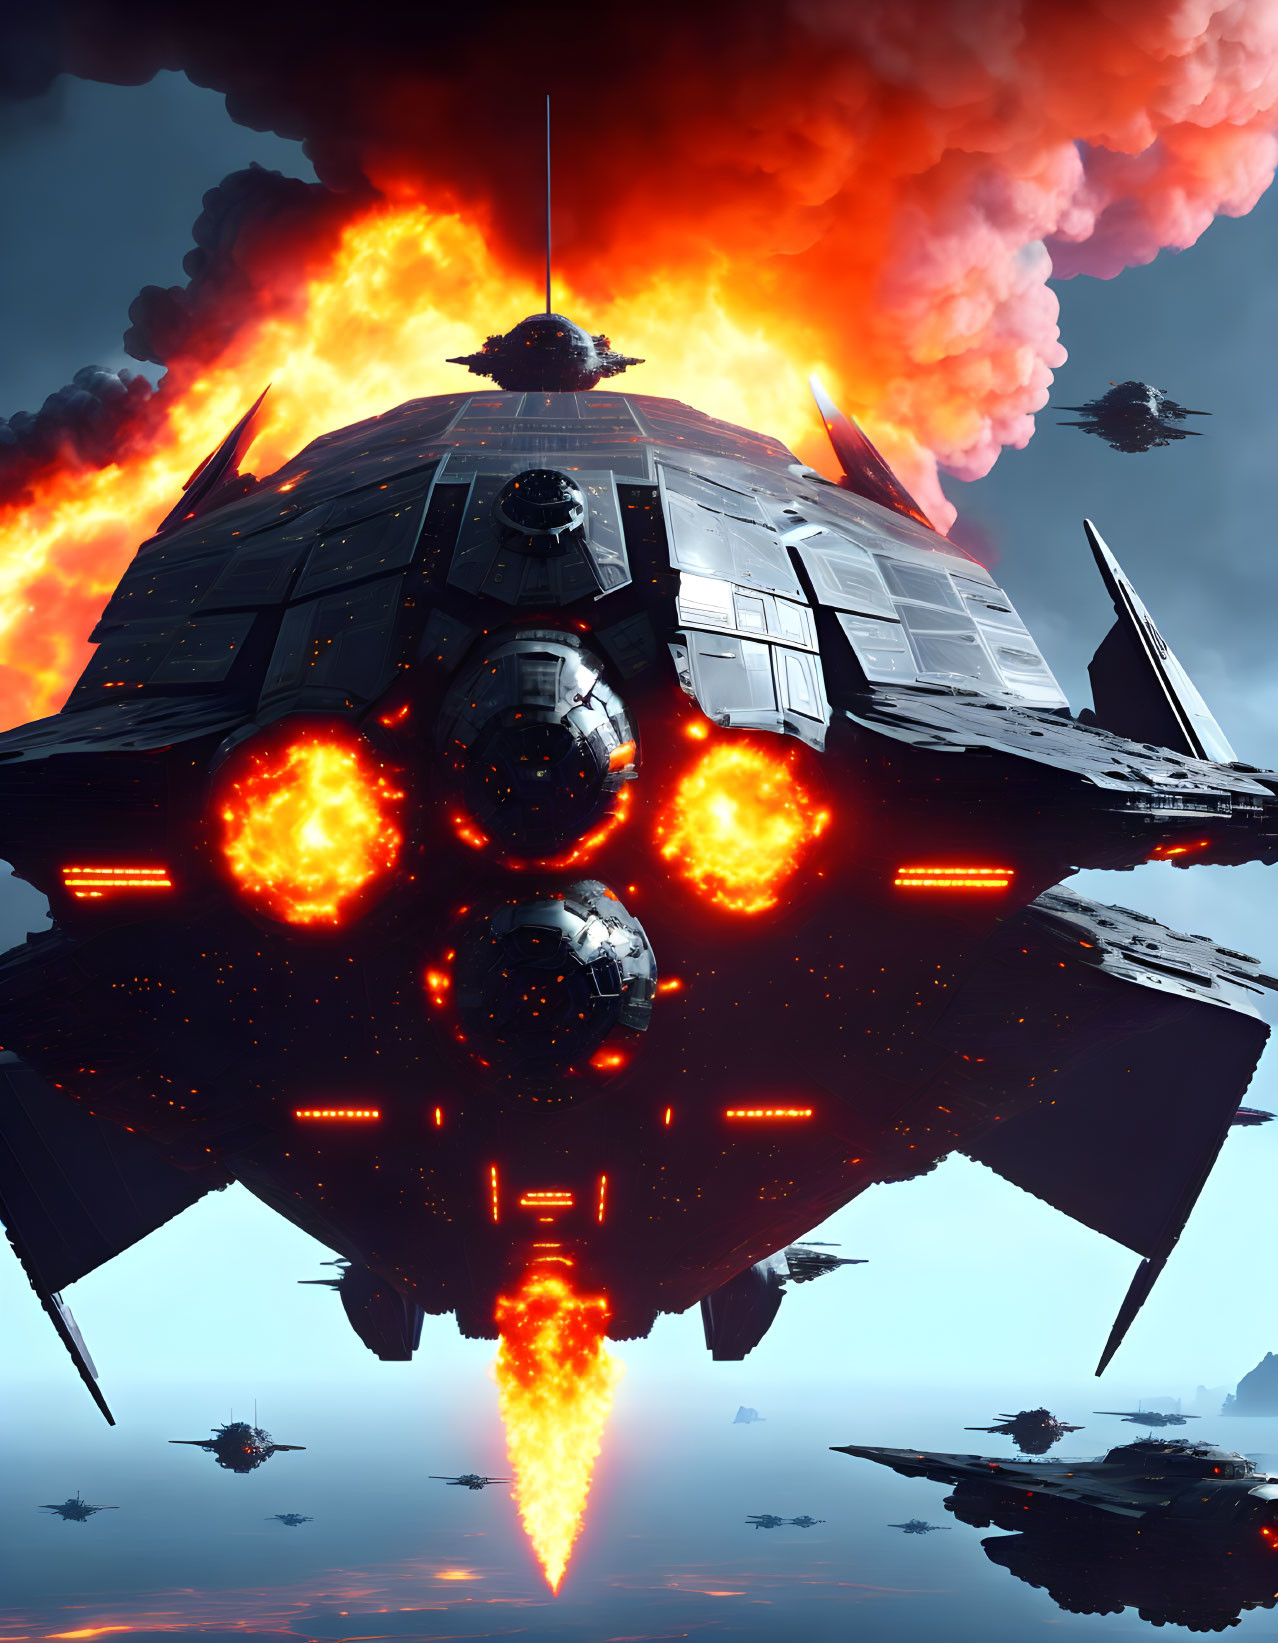 Futuristic spaceship firing weapons in dramatic sky